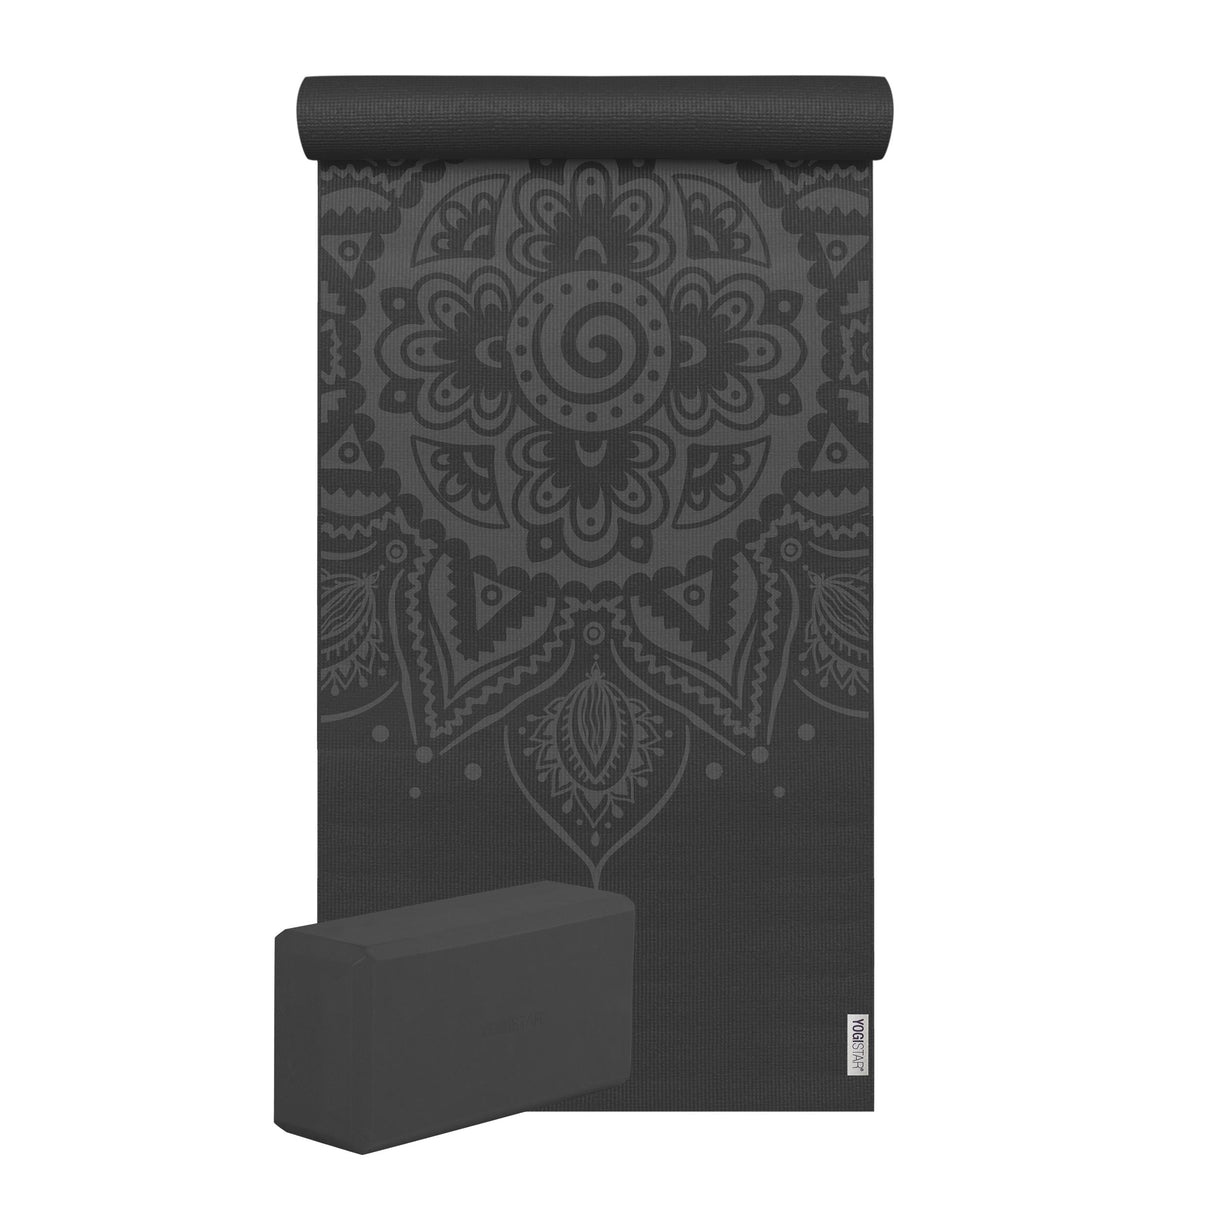 Yoga-Set Starter Edition - spiral mandala (Yogamatte + 1 Yogablock) - zen black